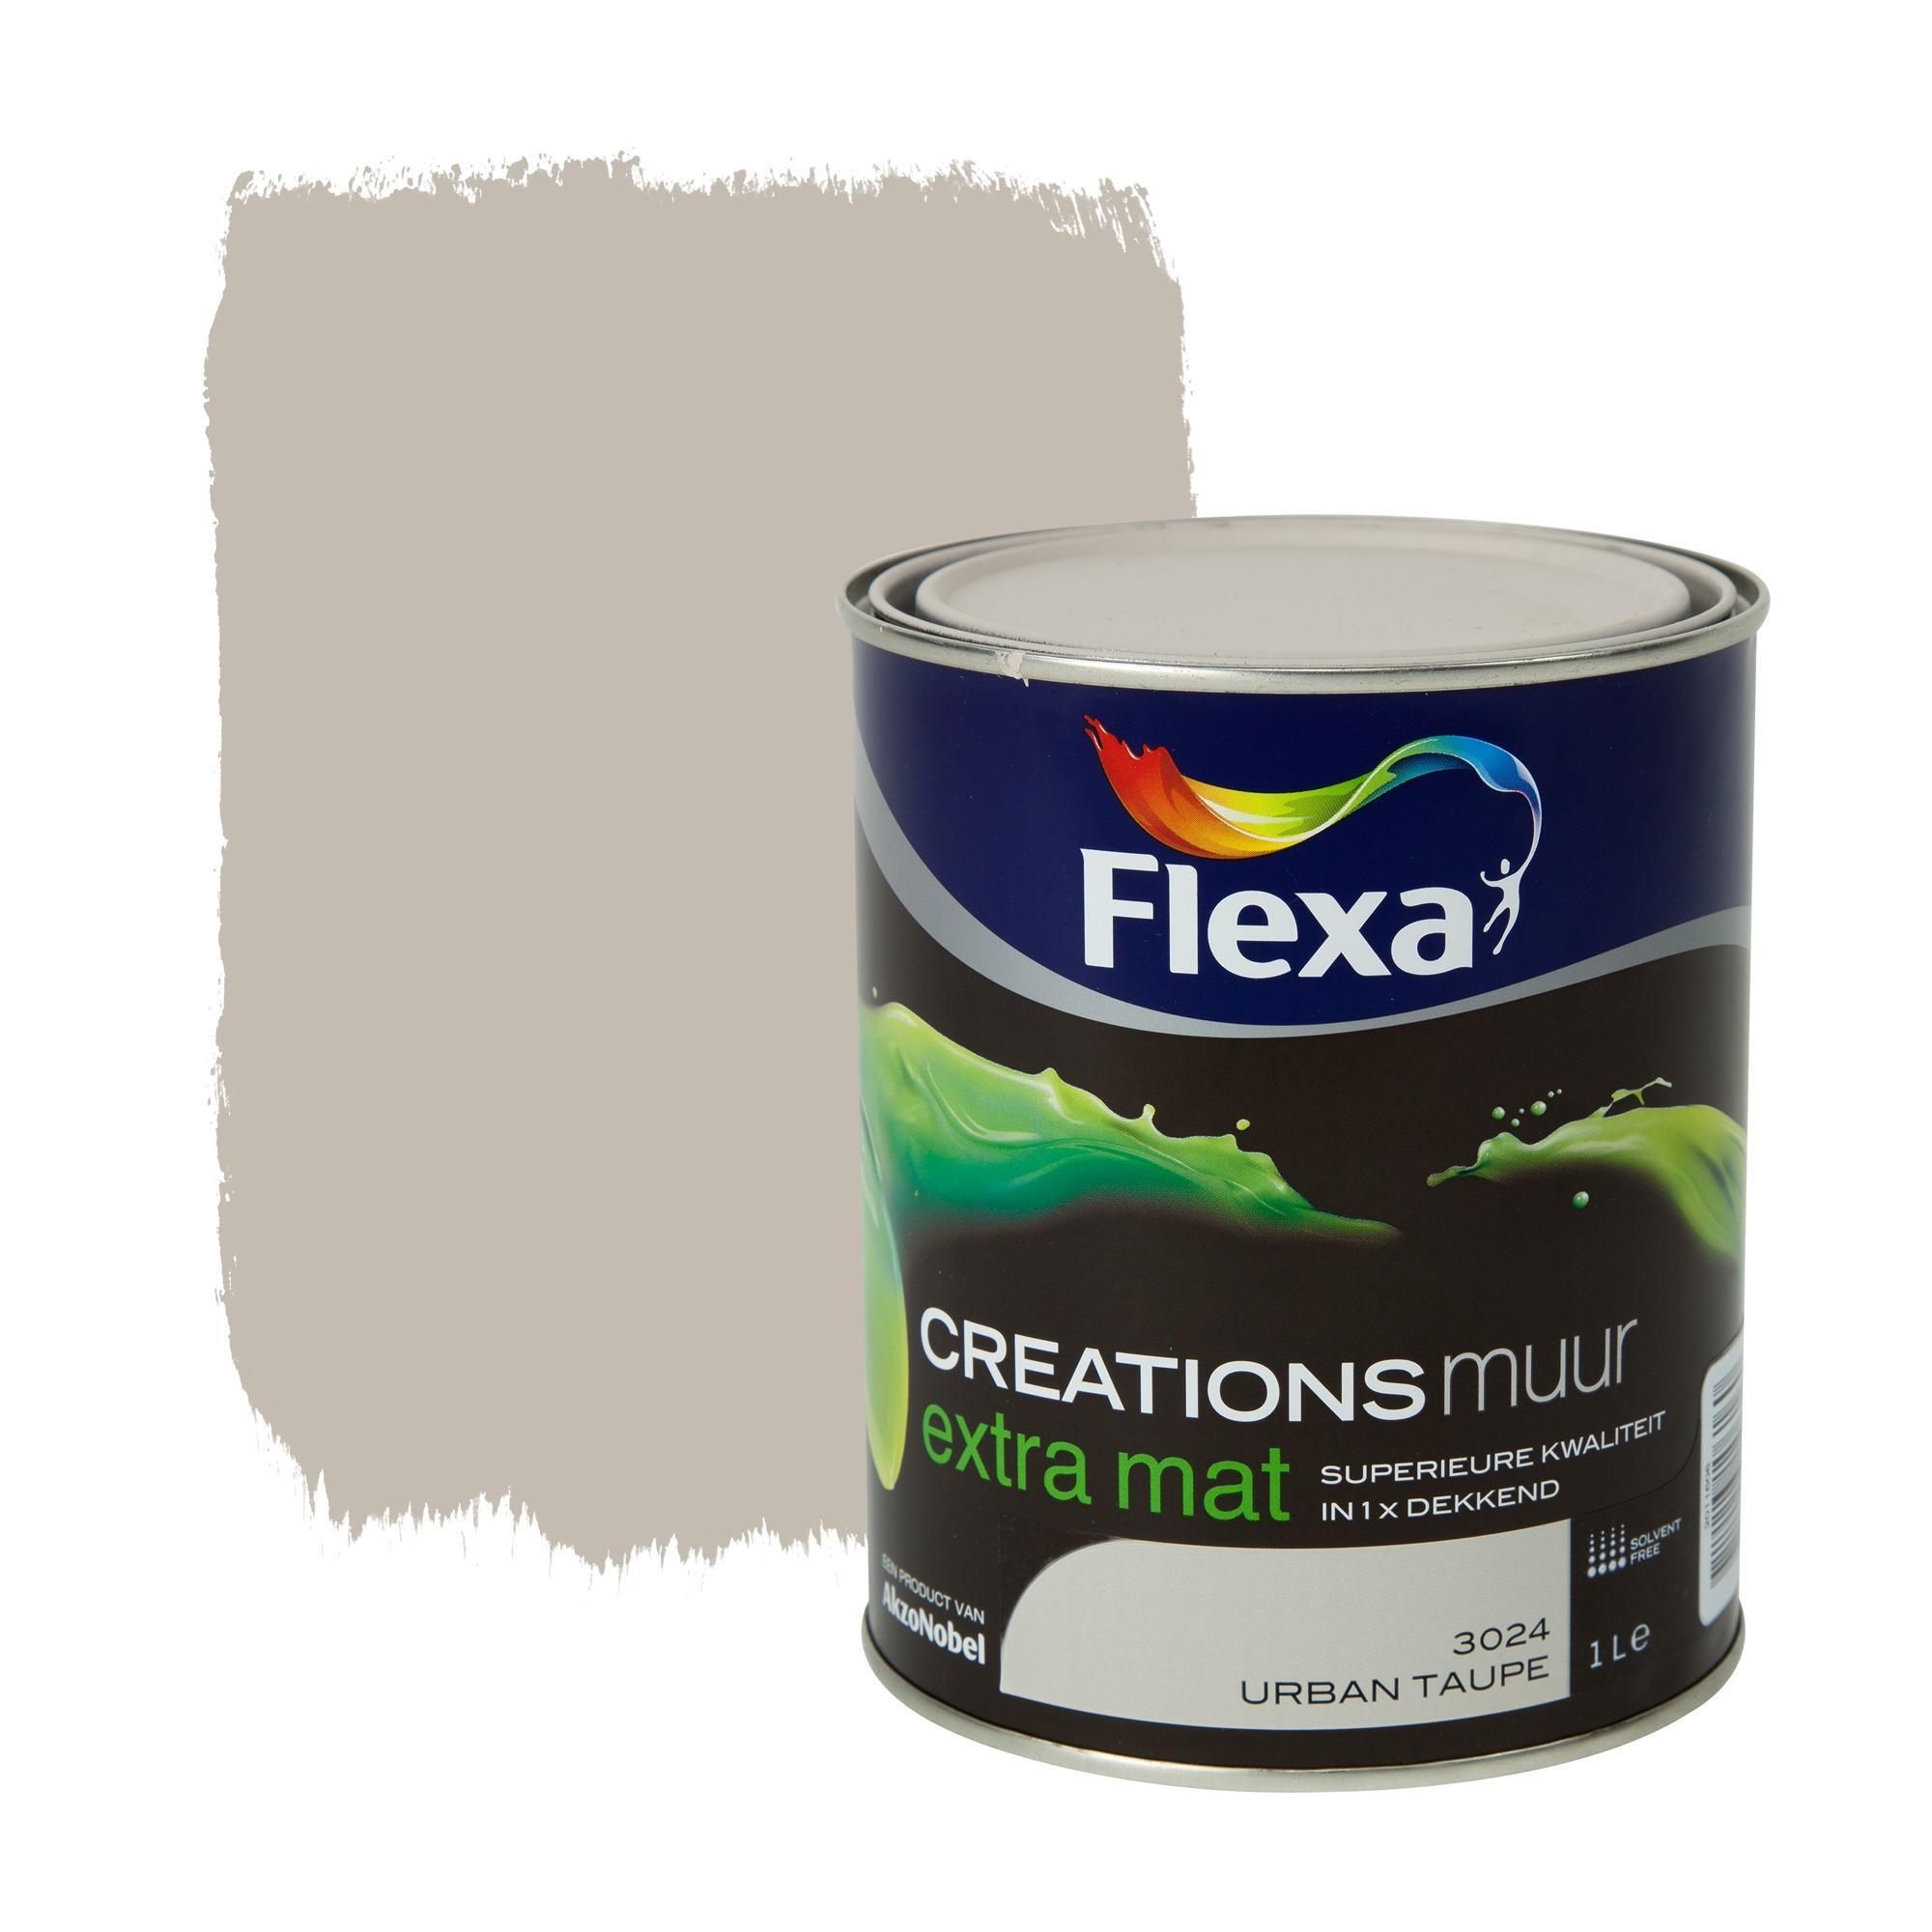 FLEXA Creations muurverf urban taupe extra mat 1 liter